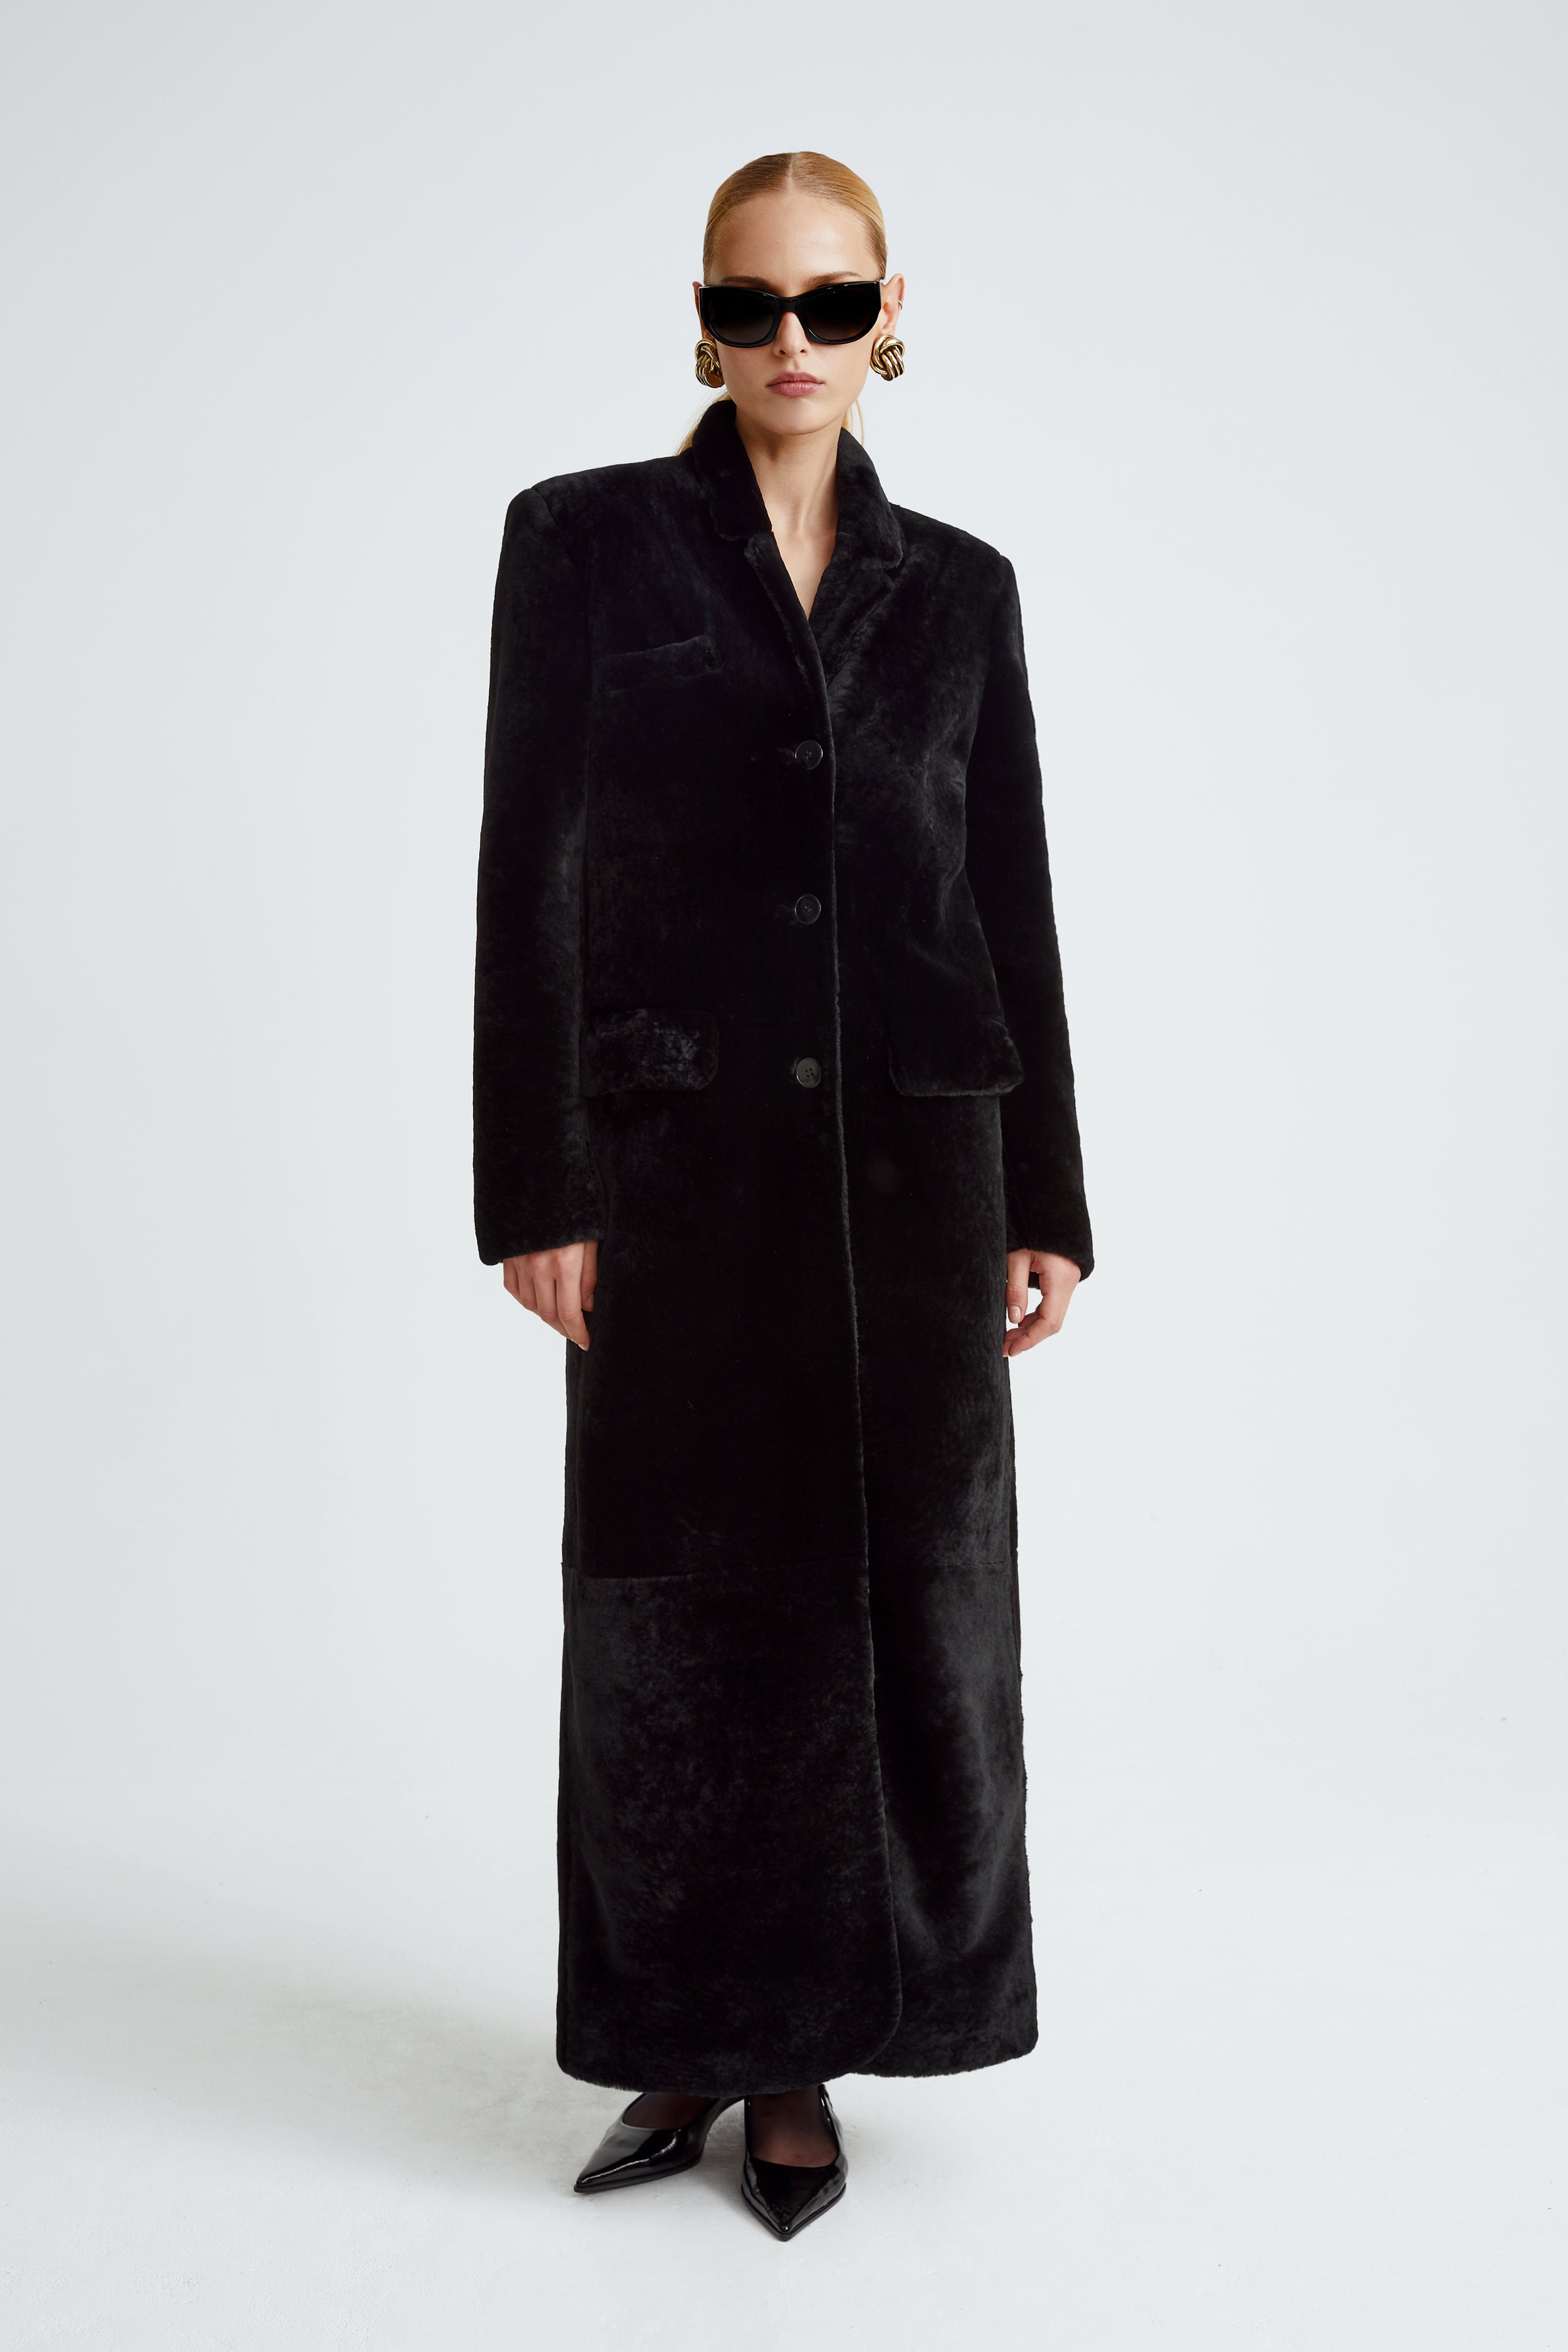 Model is wearing the Celine Shearling Black Long Shearling Coat Front